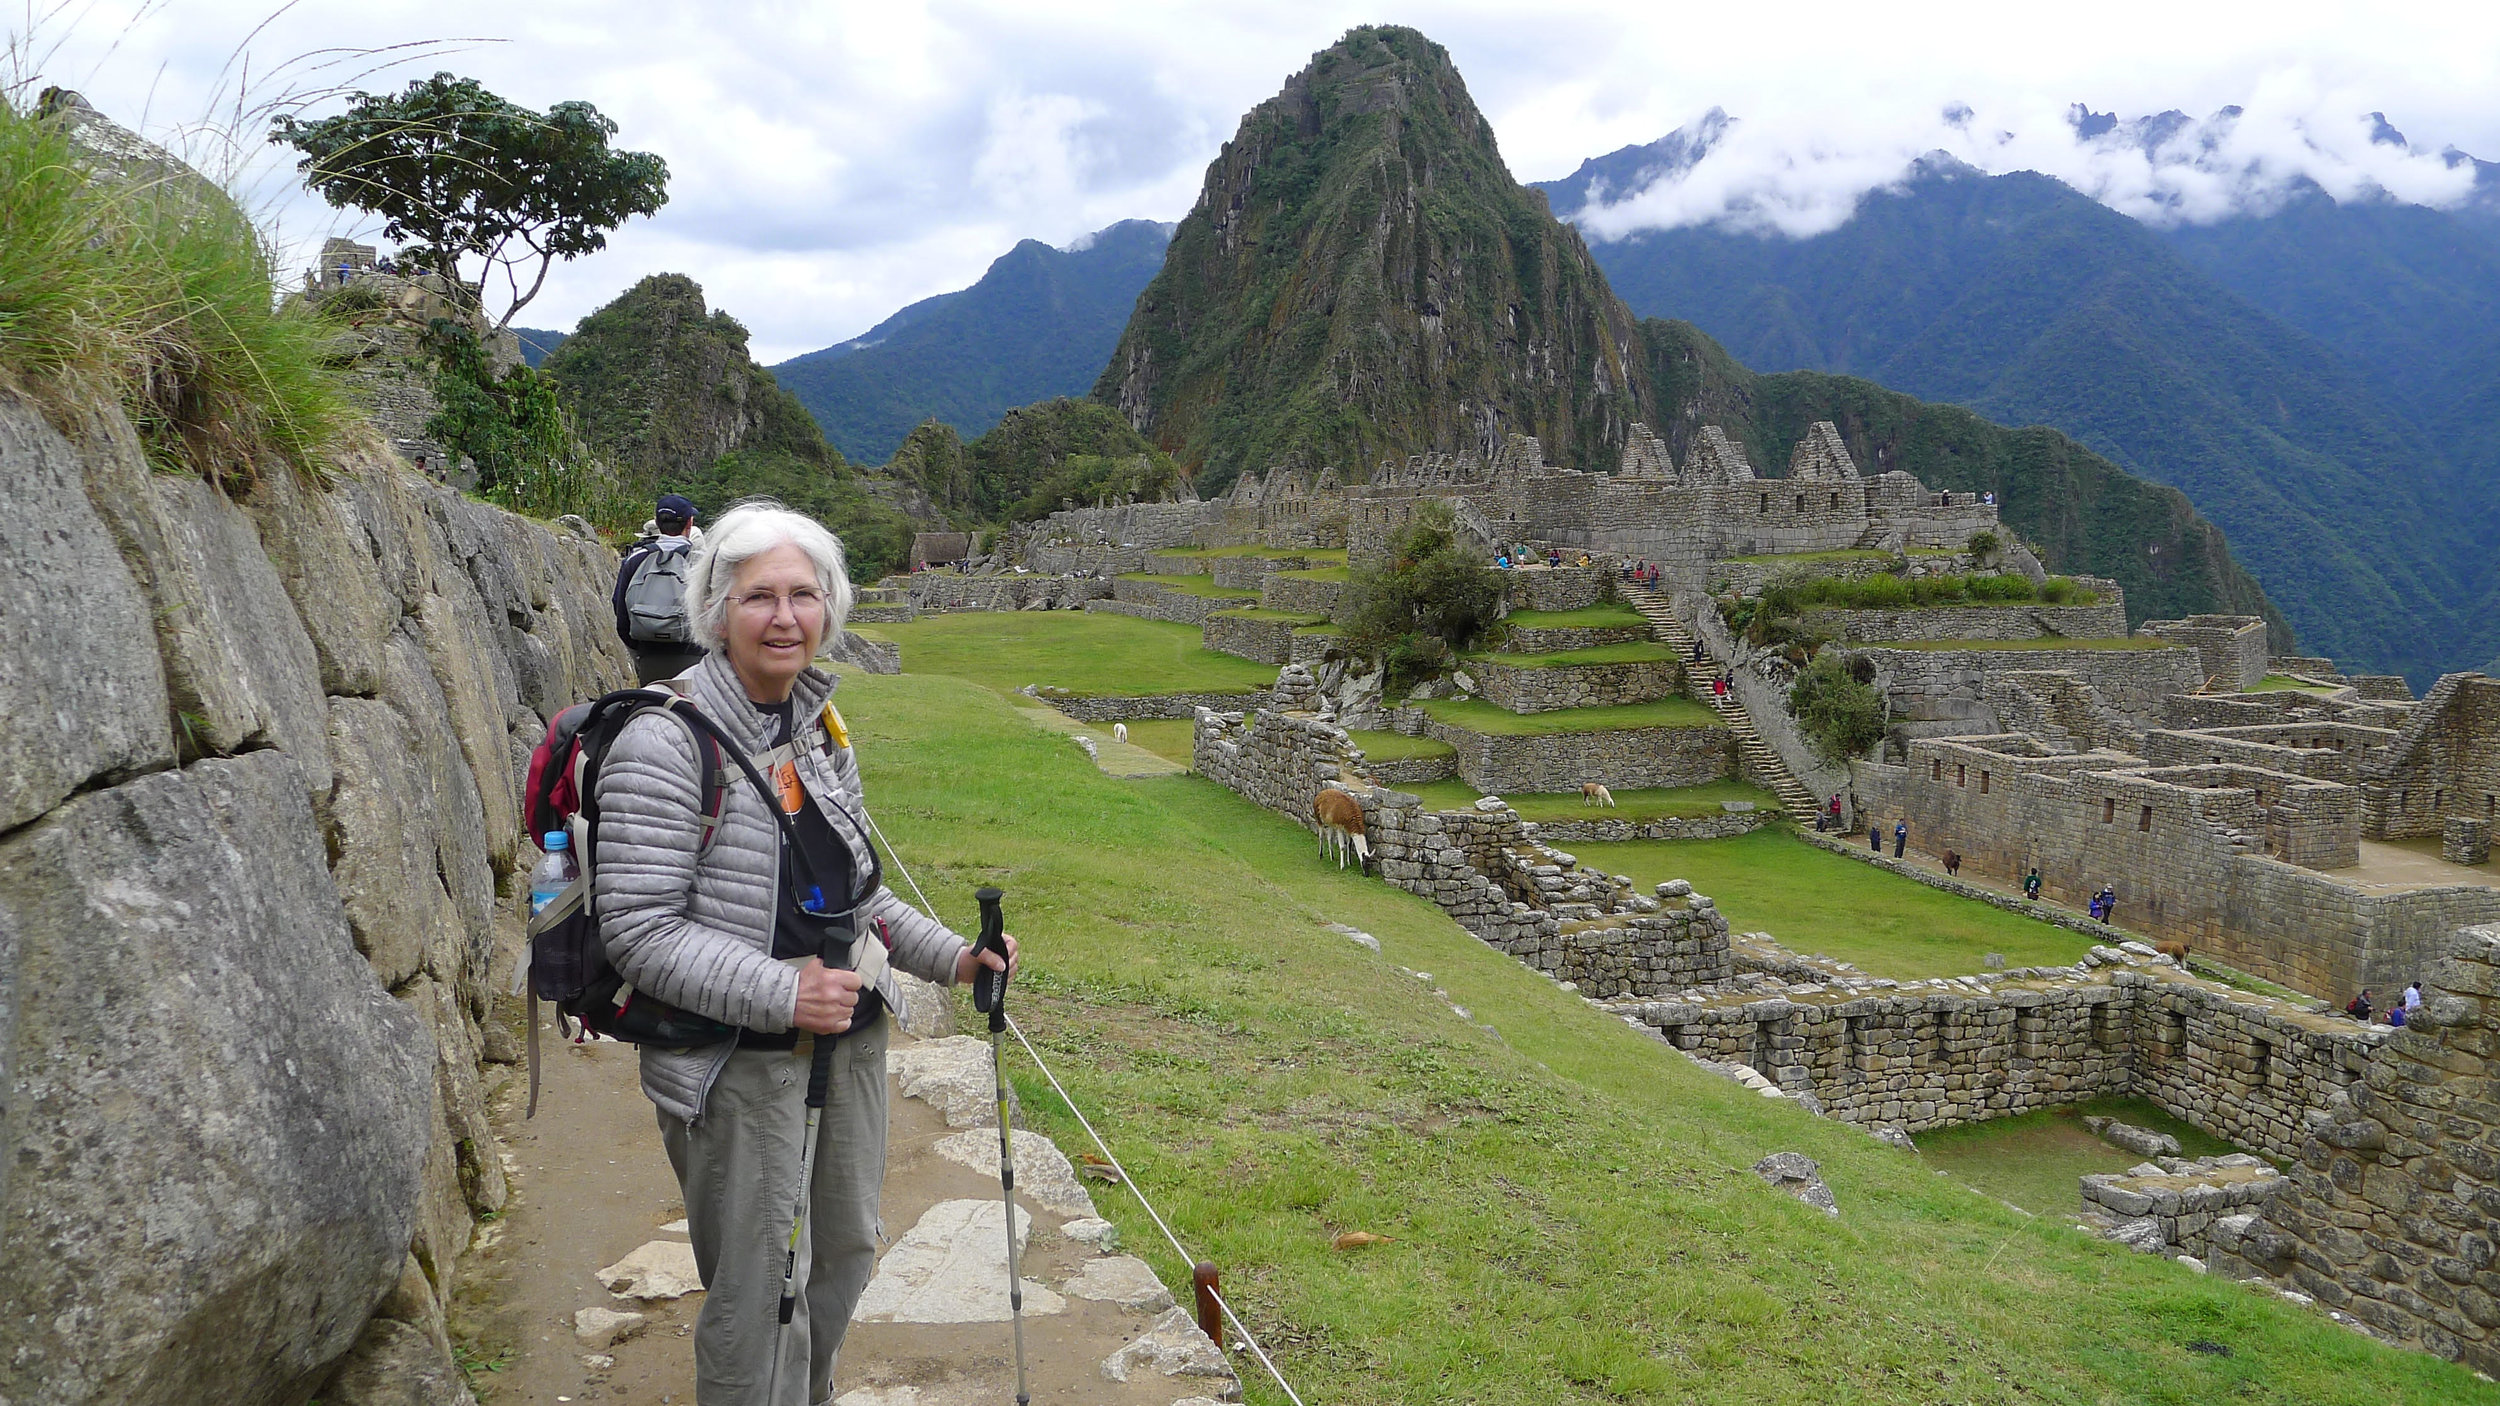 Heading Into Machu Picchu